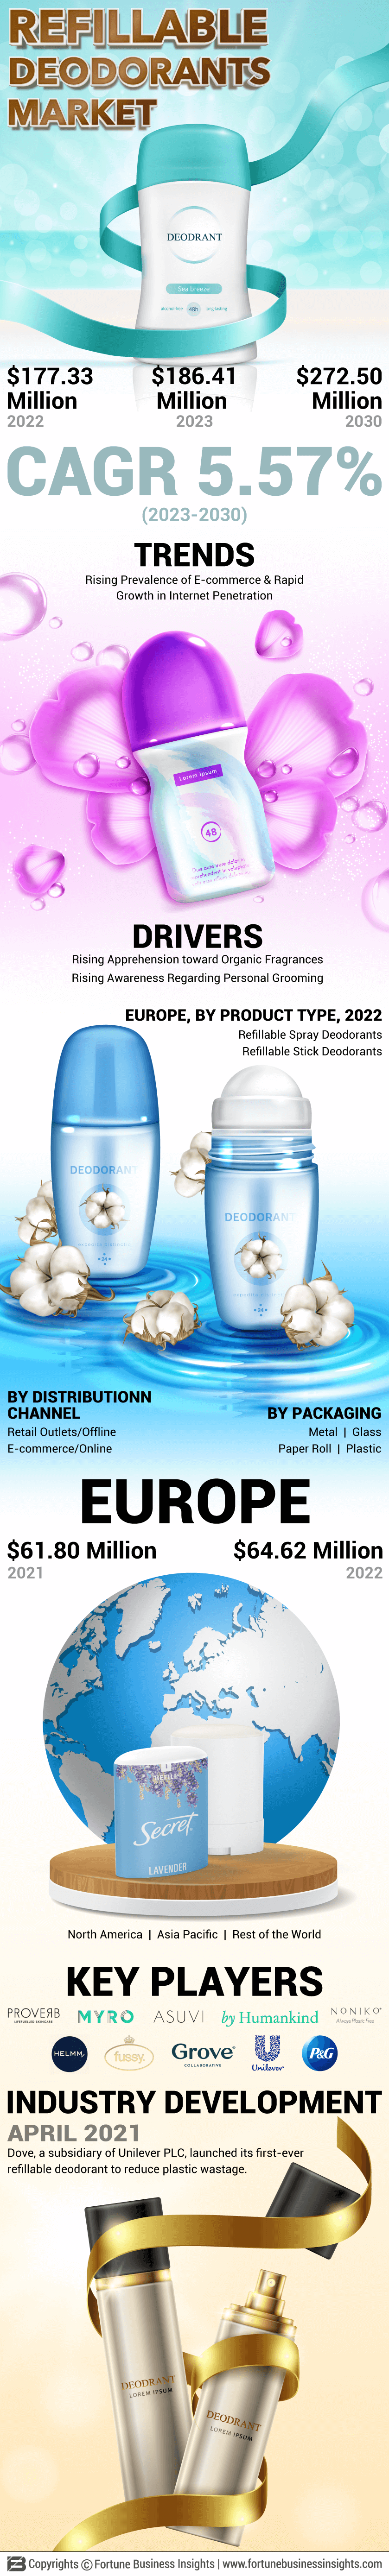 Refillable Deodorants Market